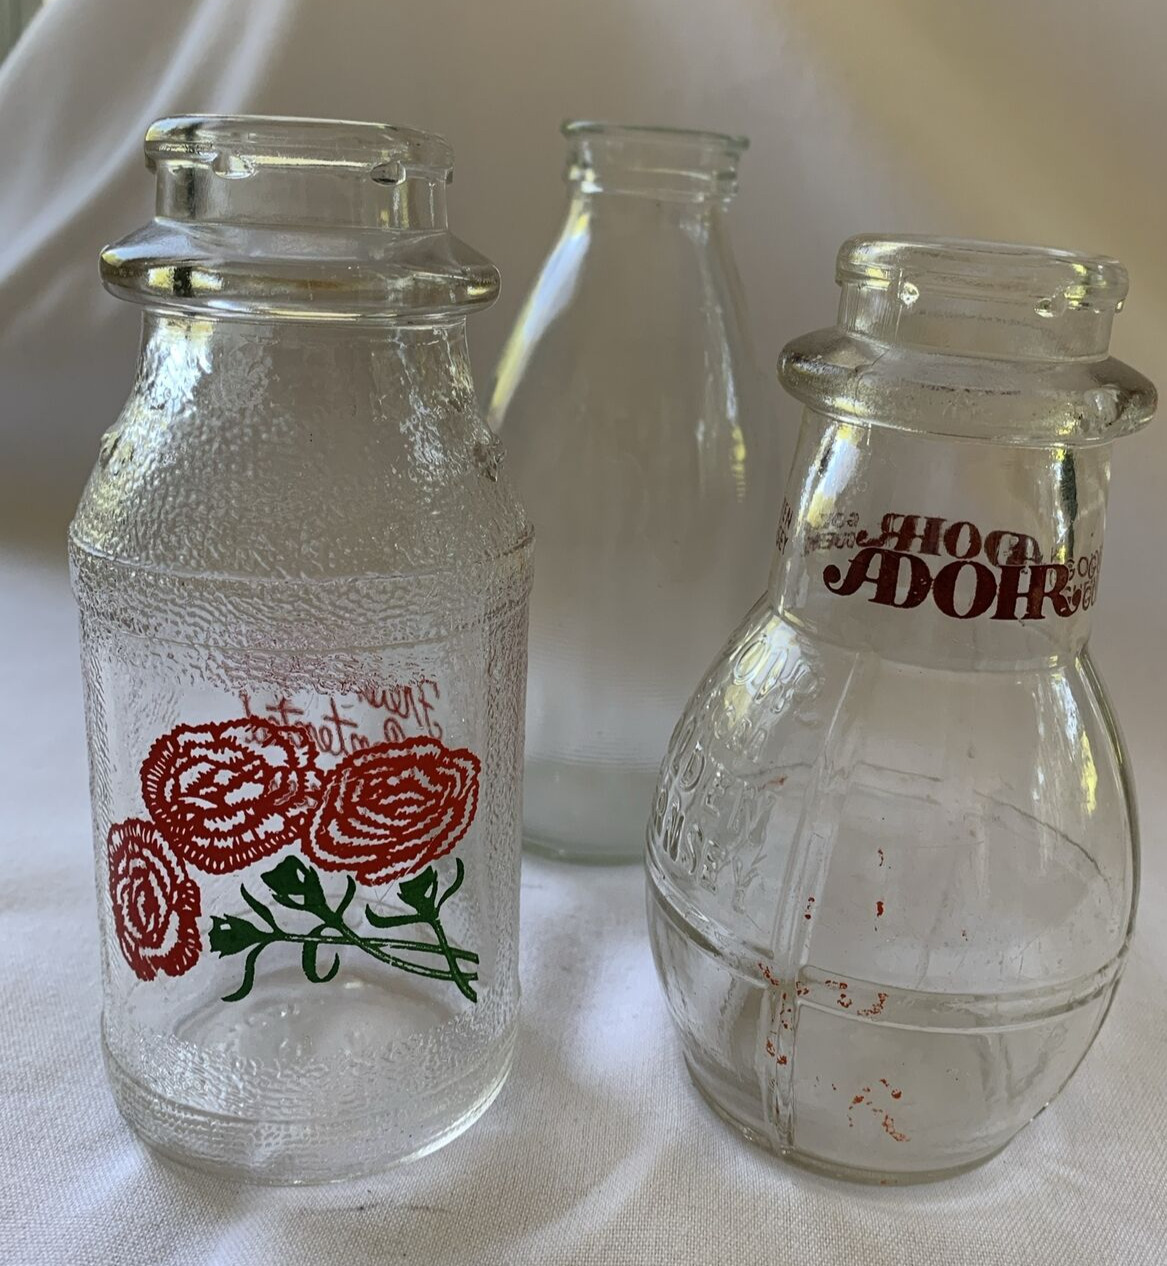 2 Vintage Half Pint Milk Bottles:  CARNATION 3 flowers and ADOHR & Bonus Bottle